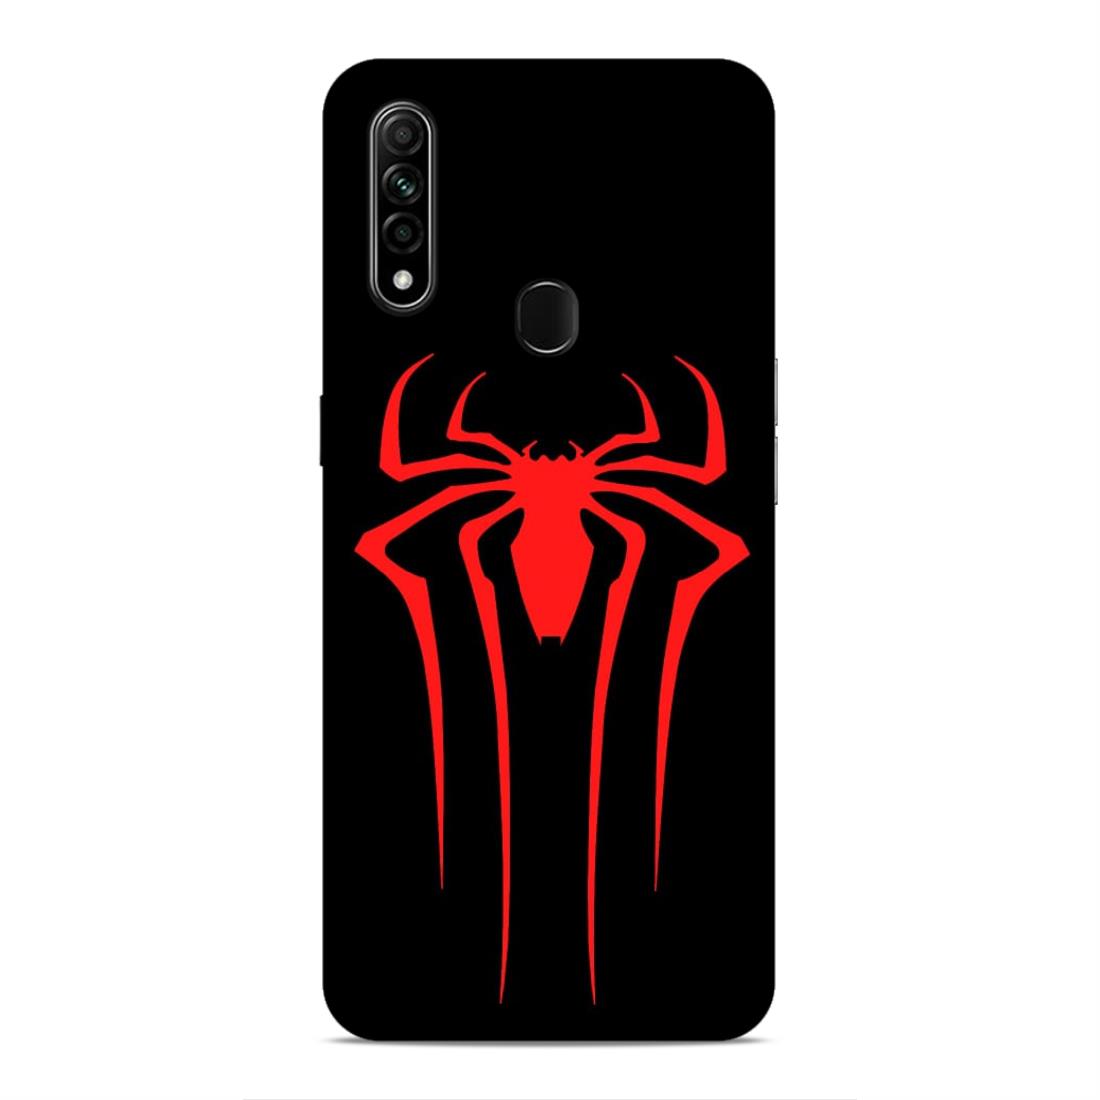 Spiderman Symbol Hard Back Case For Oppo A31 2020